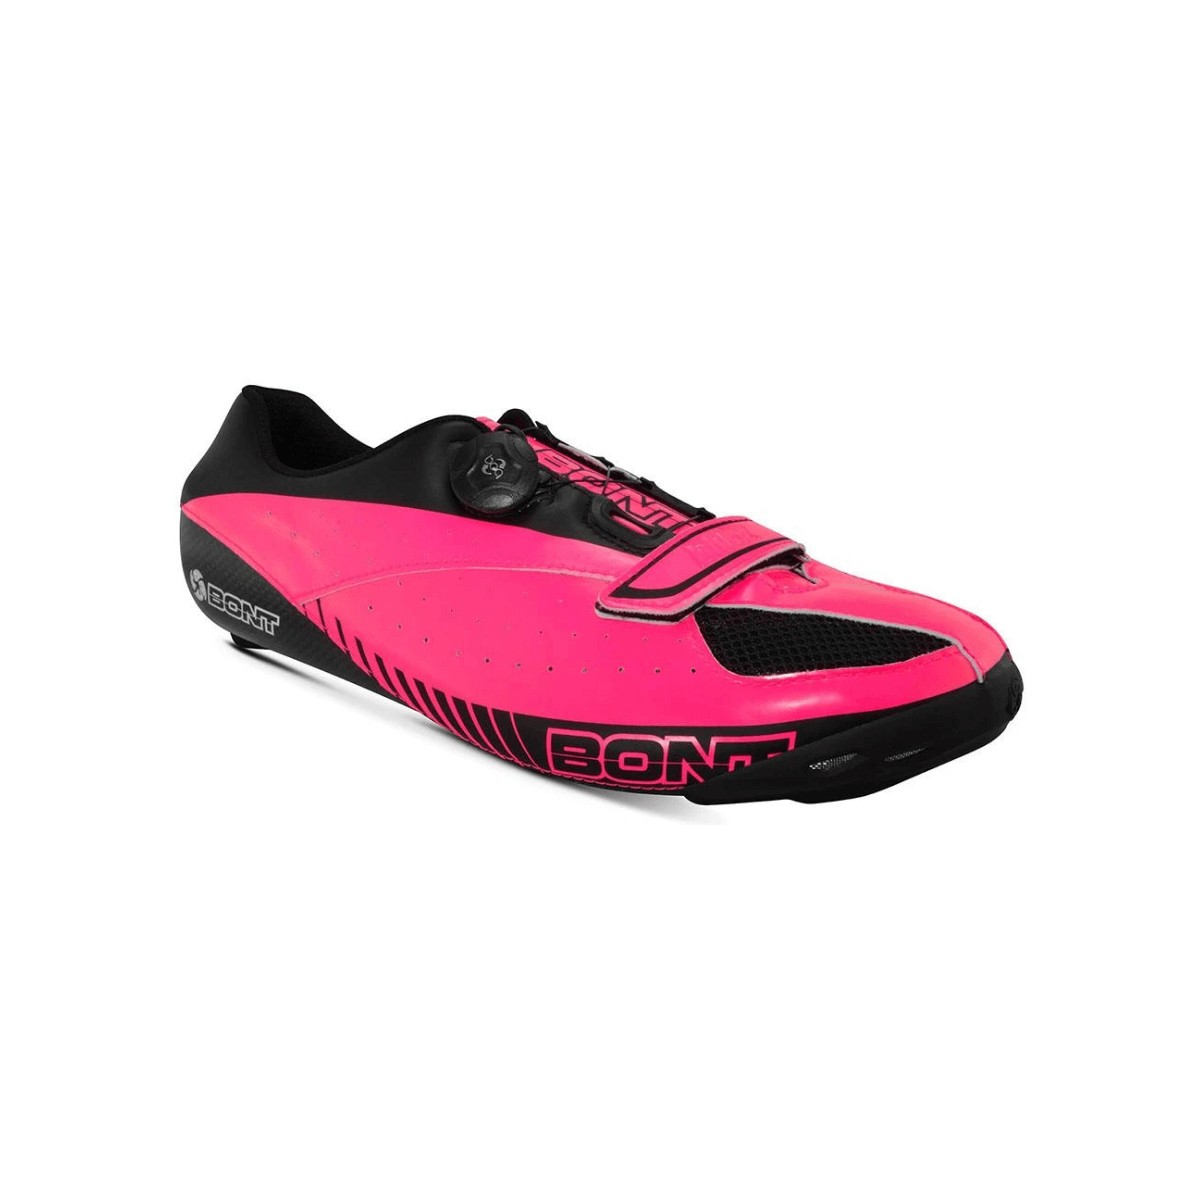 Schuhe günstig Kaufen-Bont Blitz Rennradschuhe Pink Schwarz, Größe 37 - EUR. Bont Blitz Rennradschuhe Pink Schwarz, Größe 37 - EUR <![CDATA[Bont Blitz Rennradschuhe Pink Schwarz
 Die Bont Blitz Rennradschuhe sind High-End-Schuhe, die sich perfekt an den Fu